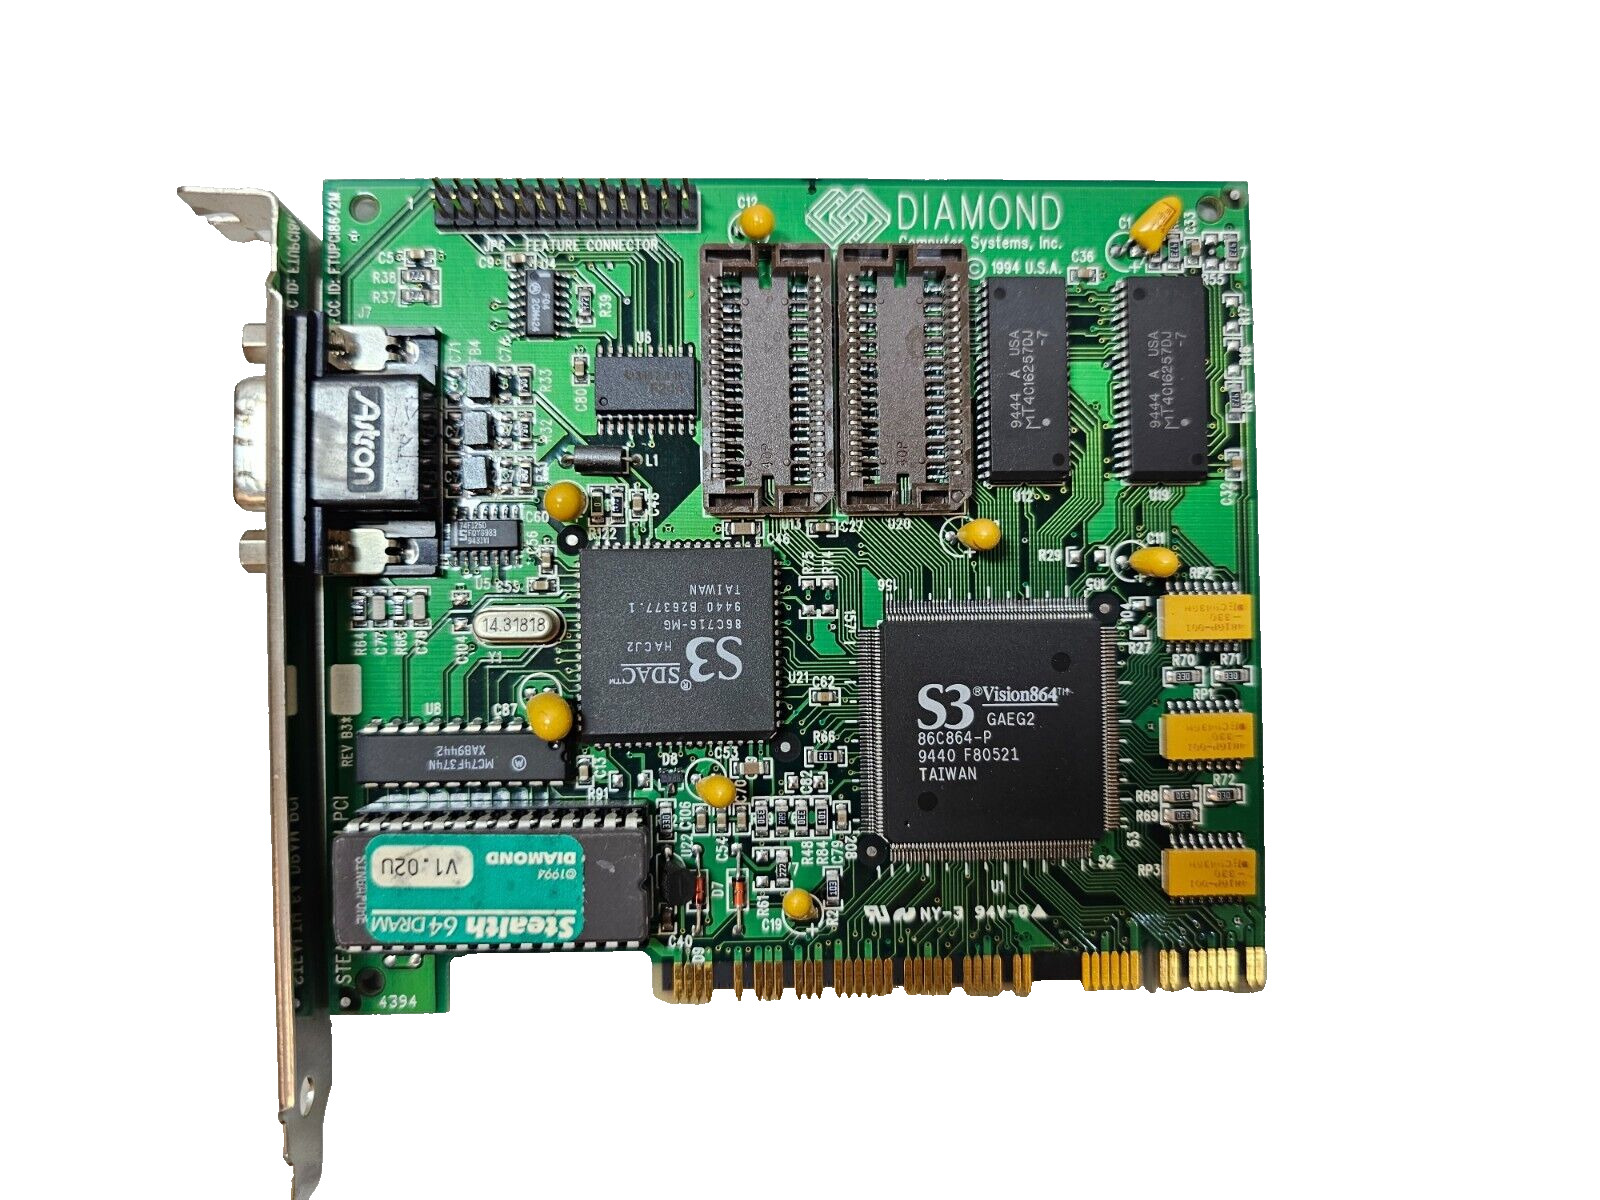 Vintage Diamond Stealth 64 DRAM (S3 VISION864 2MB) PCI VGA Graphics Card Tested